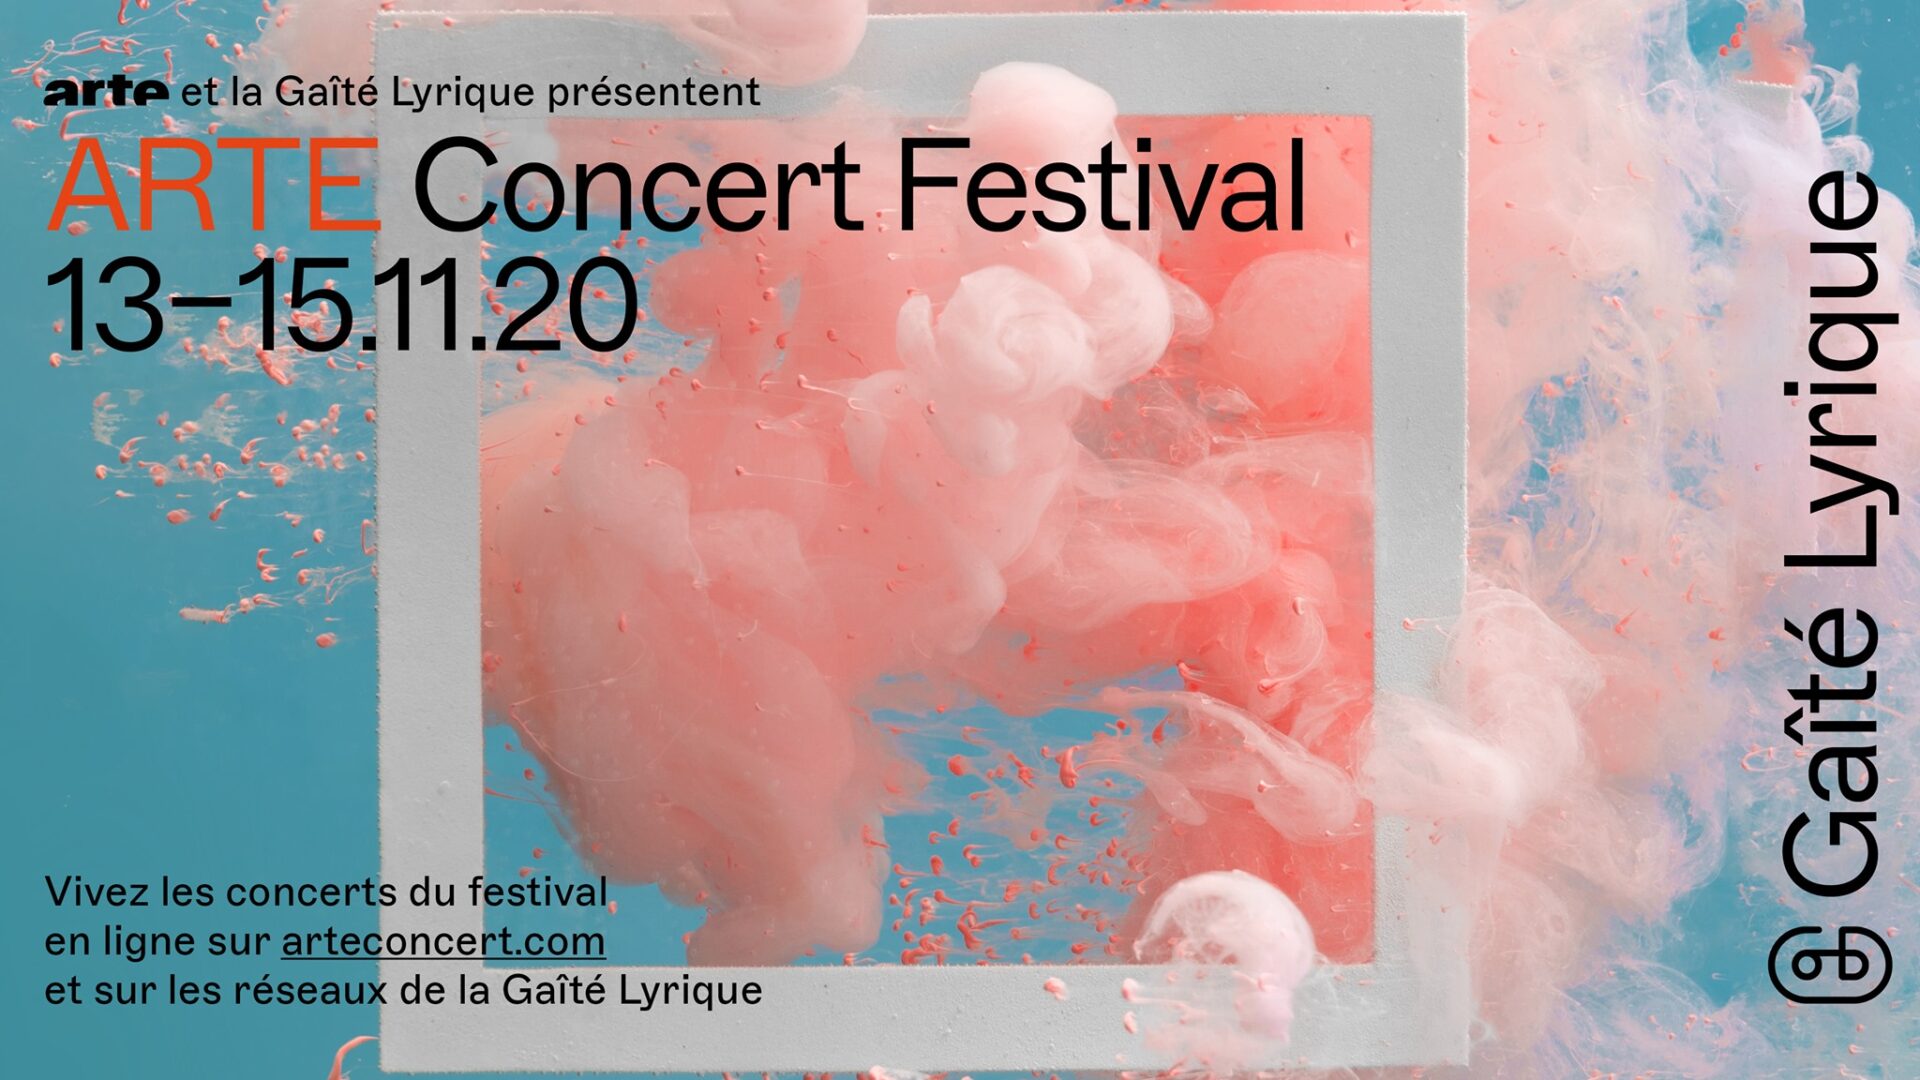 ARTE Concert Festival 2020 : a 3-days digital edition! - Clubbing TV